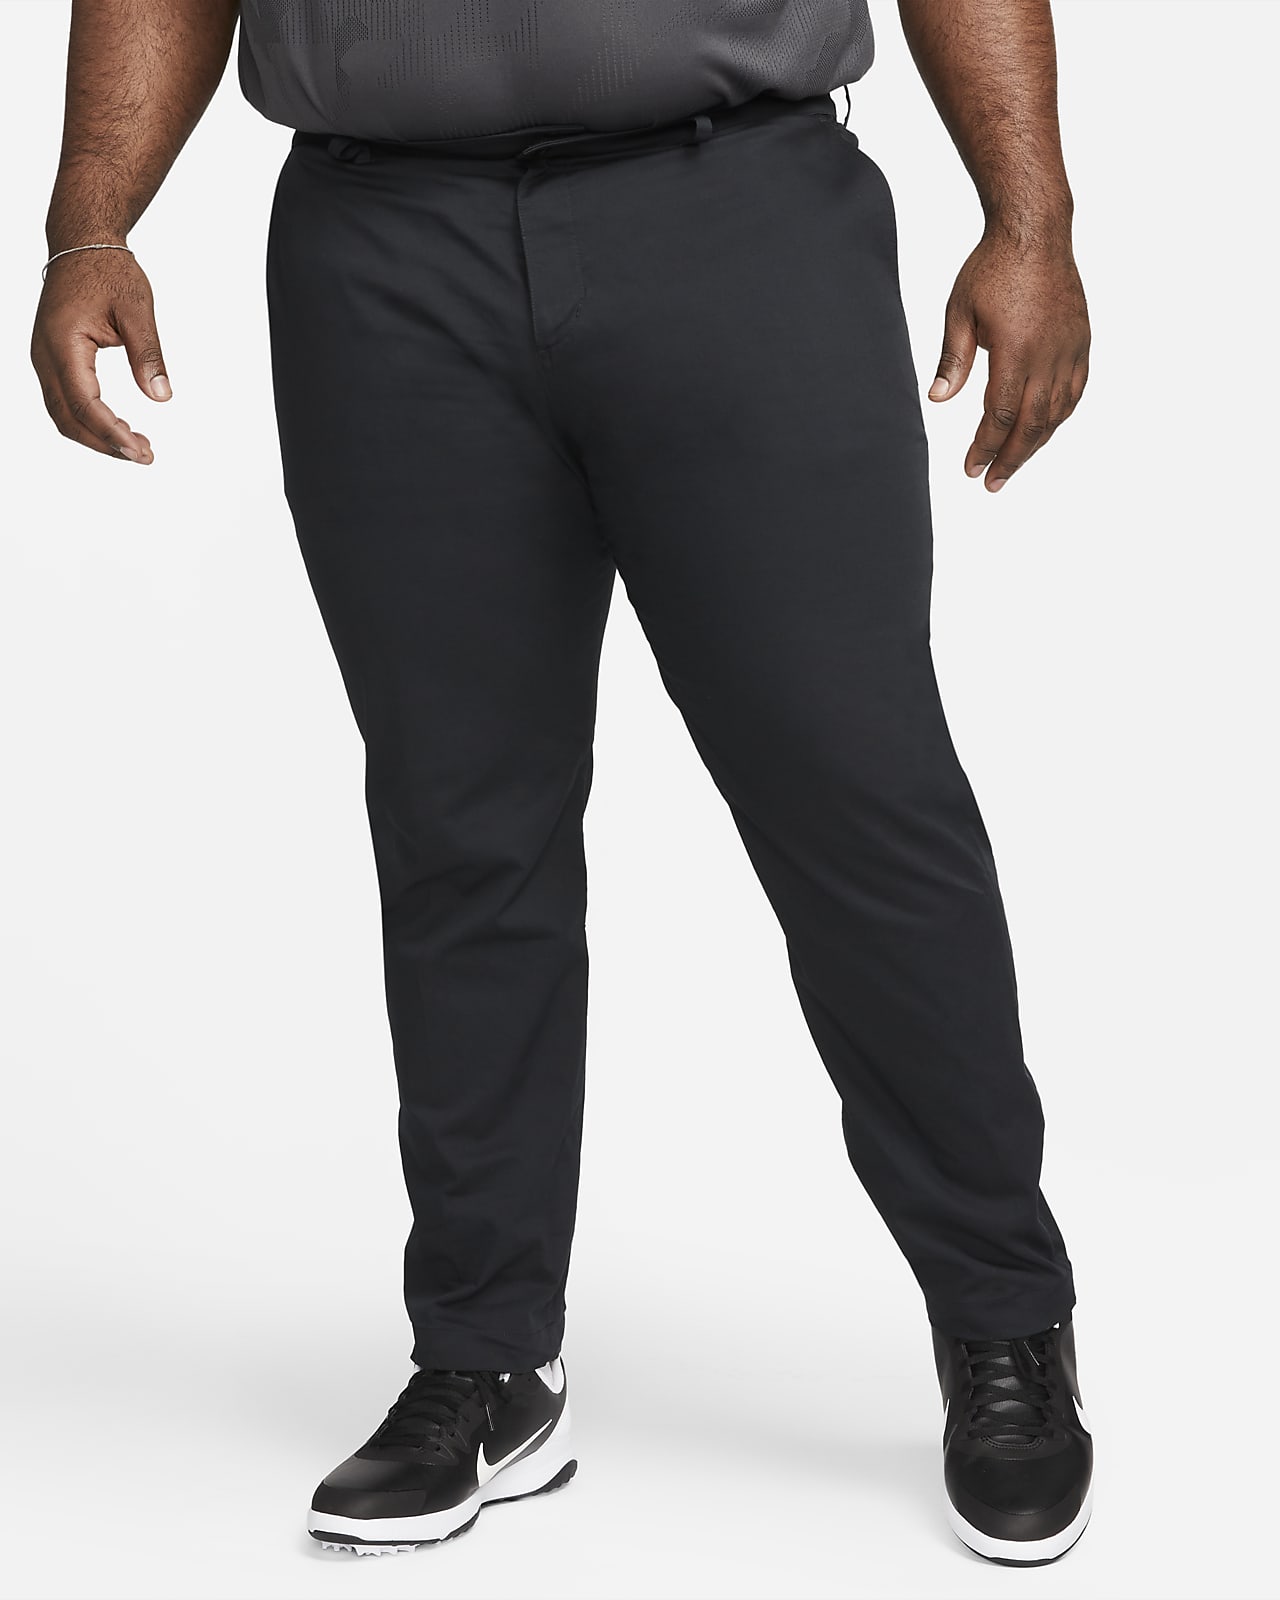 Nike Dri-FIT UV Men's Slim-Fit Golf Chino Trousers. Nike CA